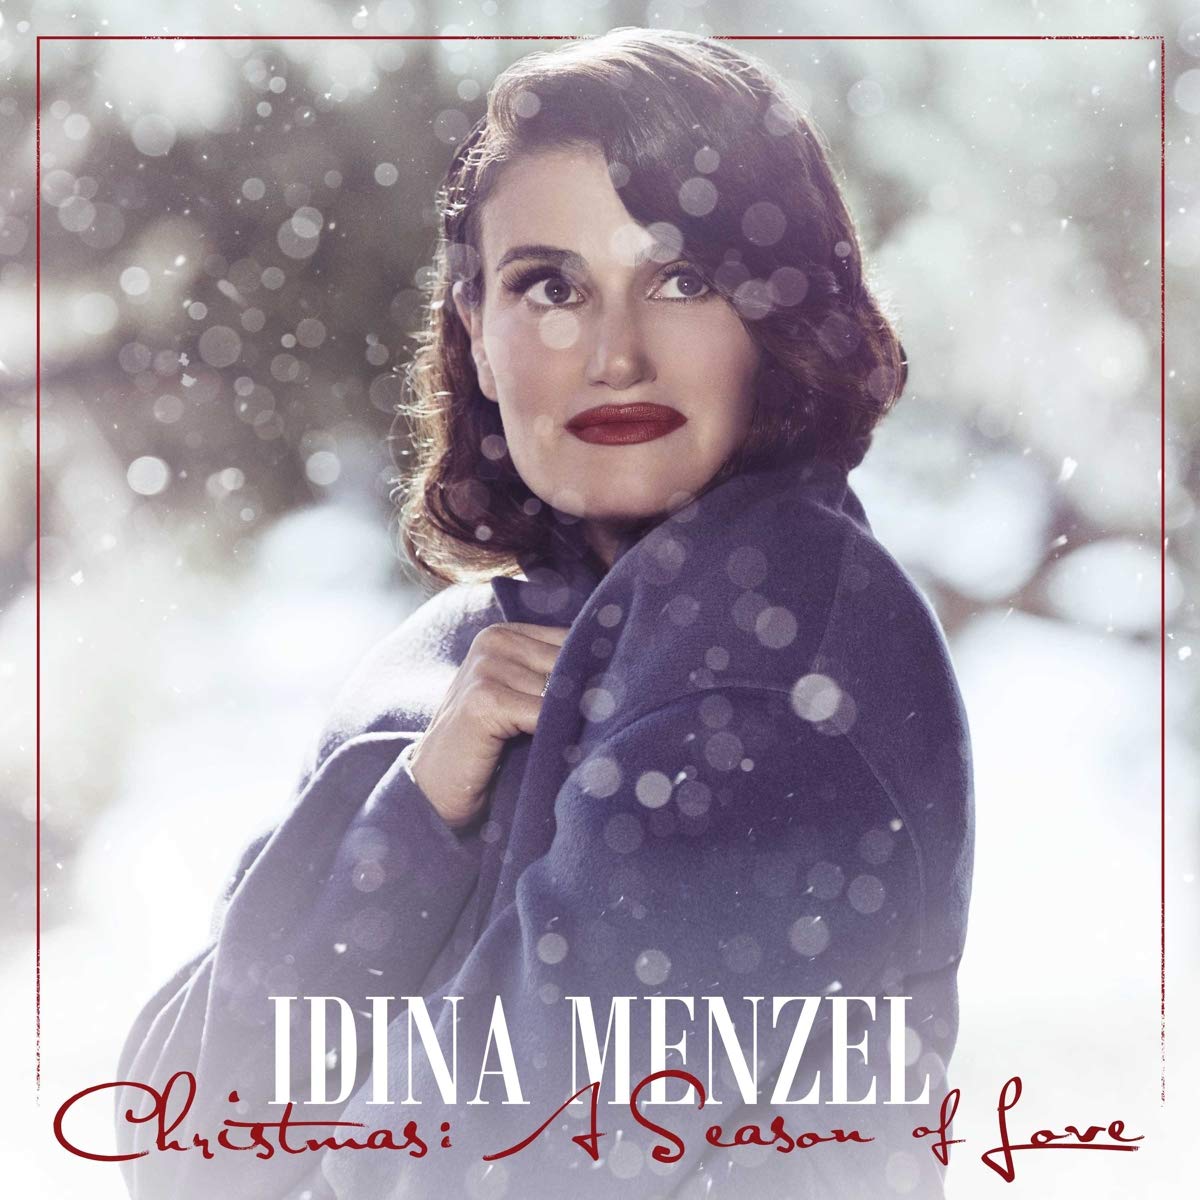 Idina Menzel - Christmas just ain't Christmas